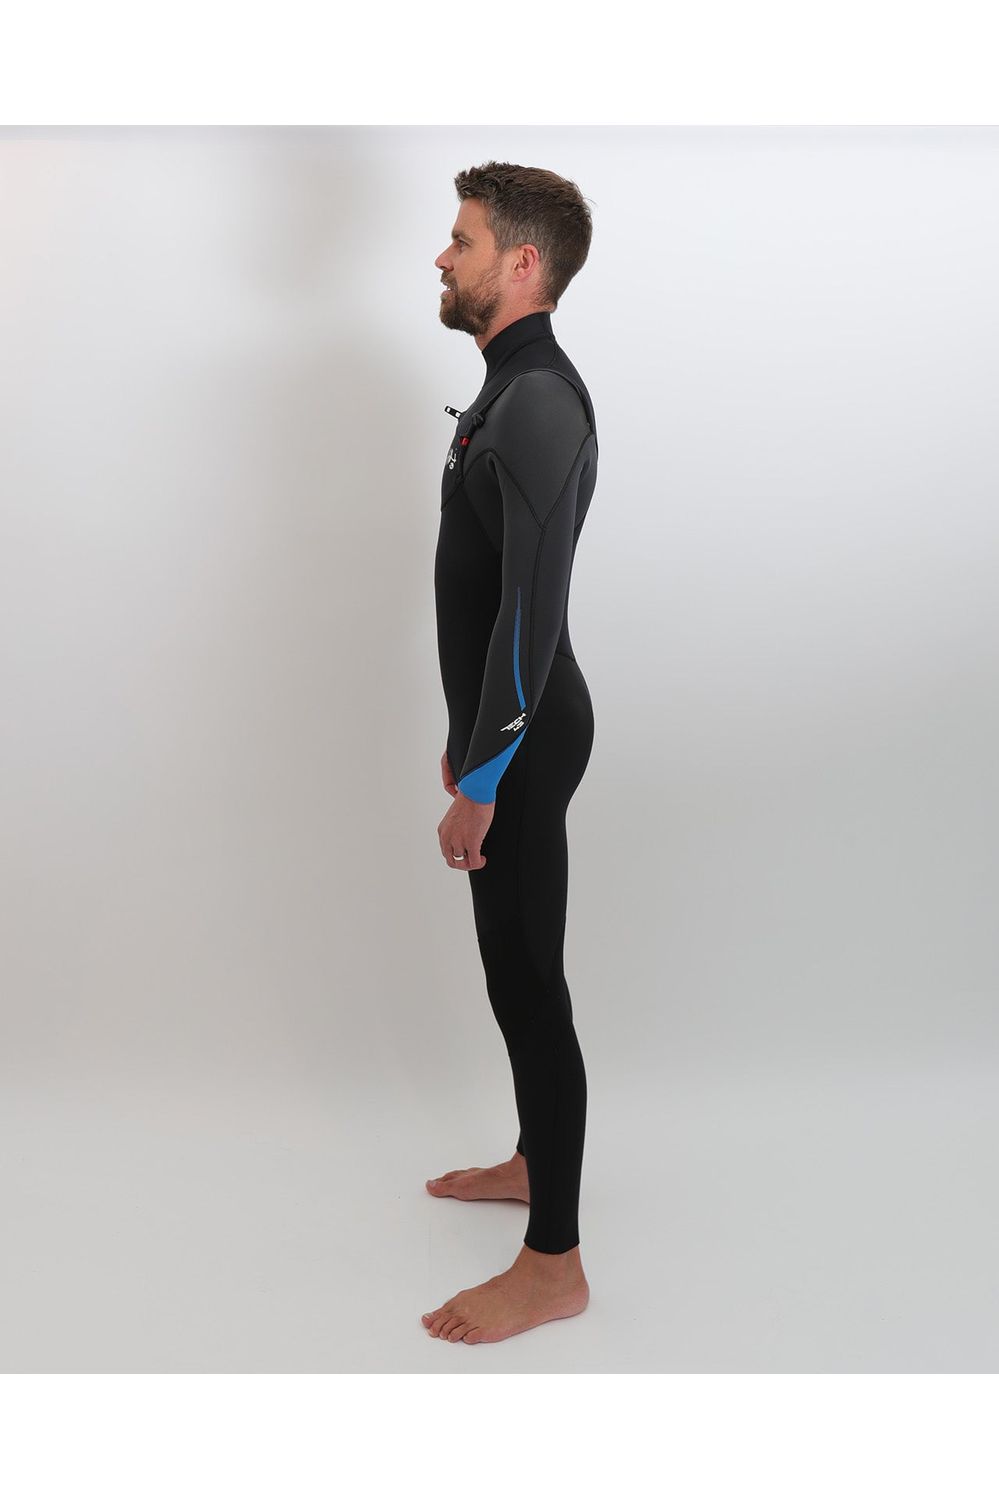 Tiki Mens Tech 3/2 GBS Wetsuit - Chest Zip - Black/Electric Blue